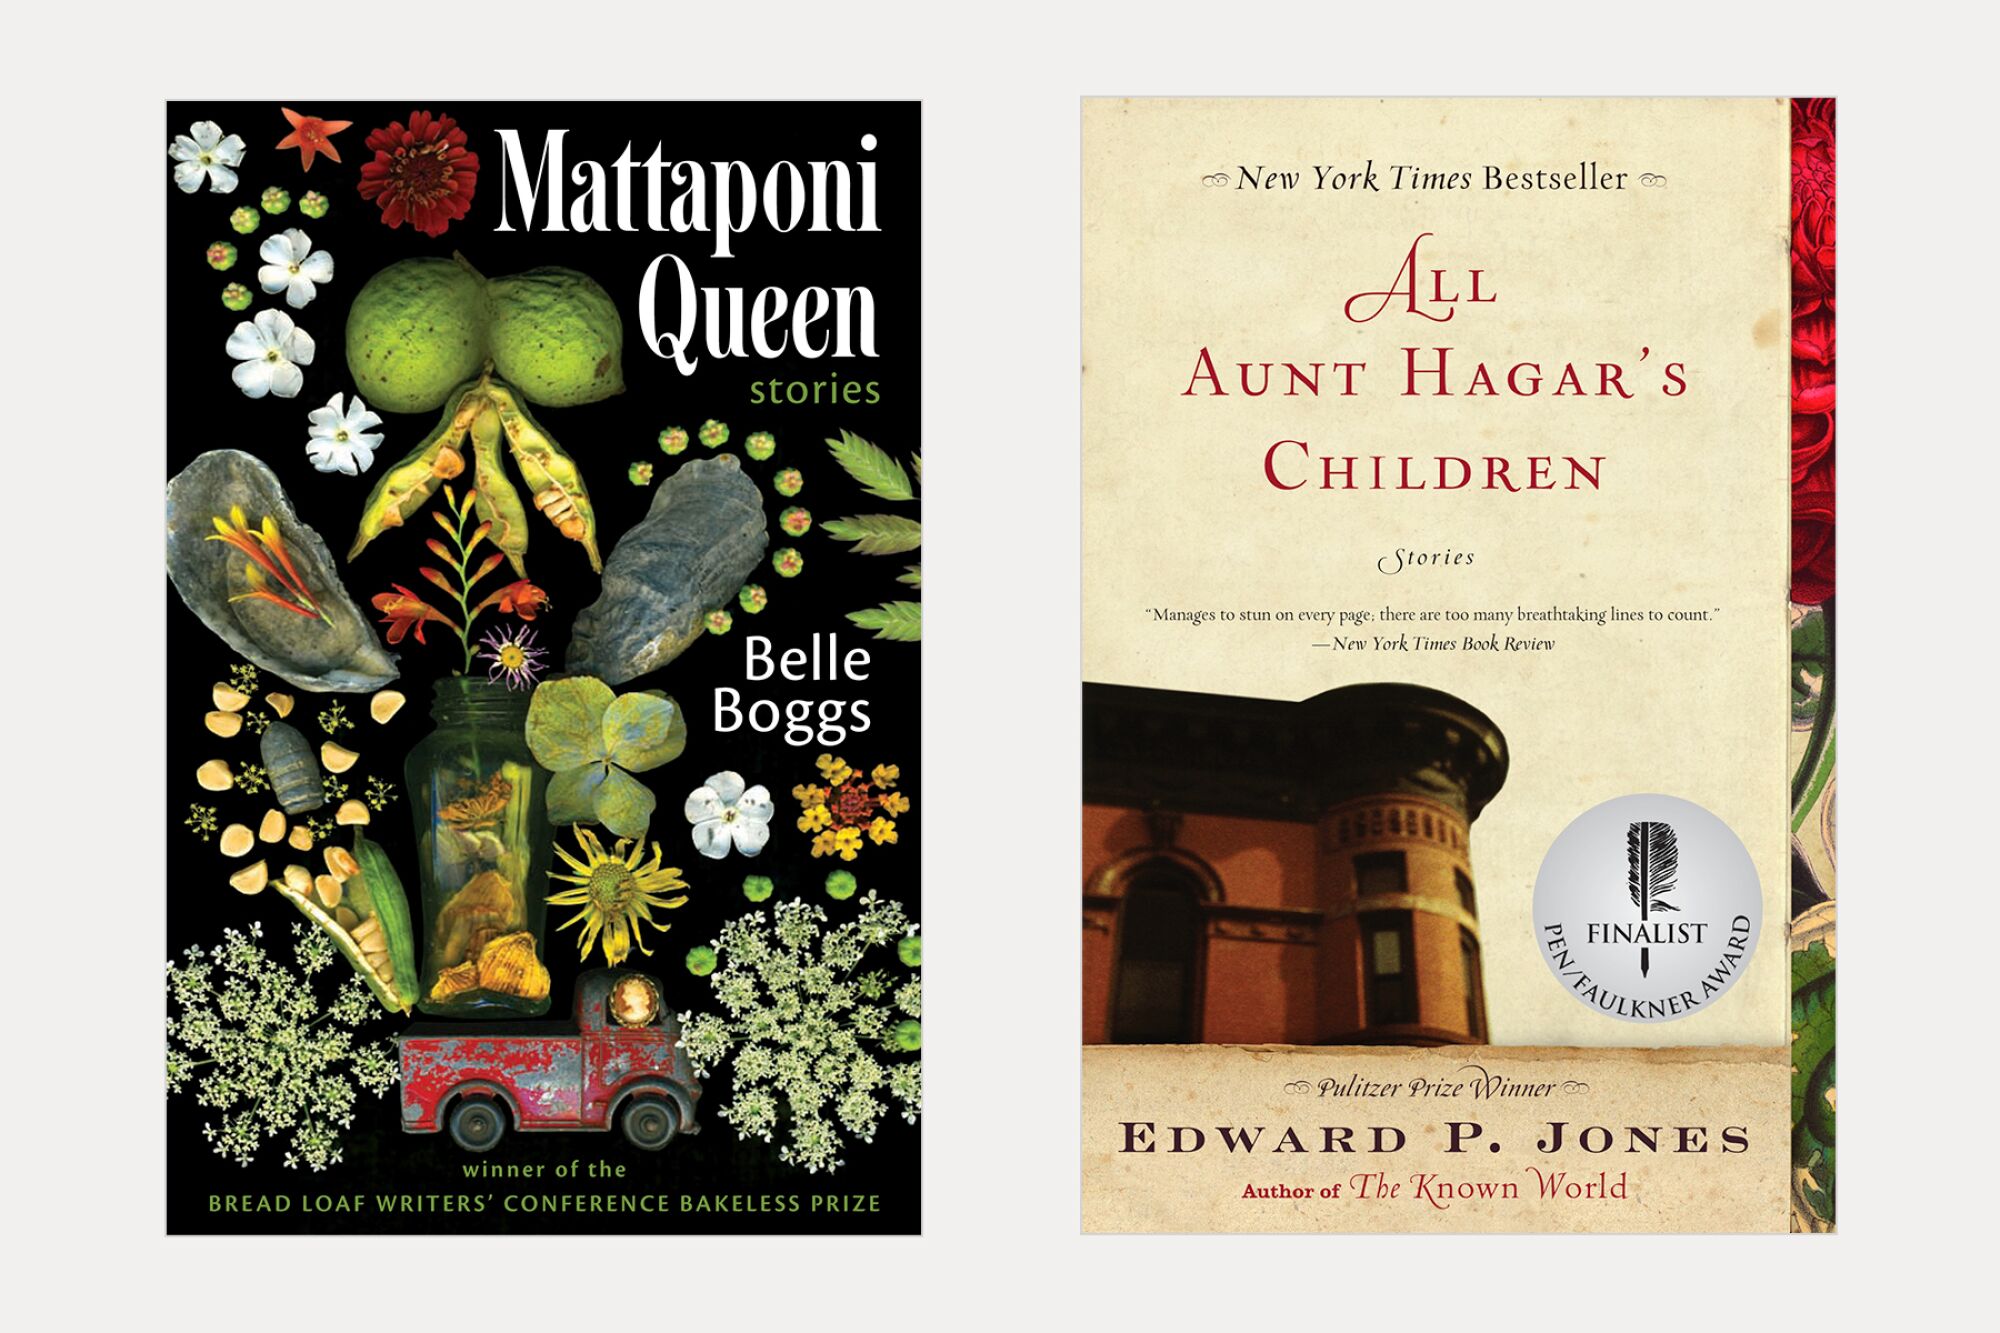 iki kitap kapağı: Belle Boggs'tan Mattaponi Queen ve Edward P. Jones'tan All Aunt Hagar's Children